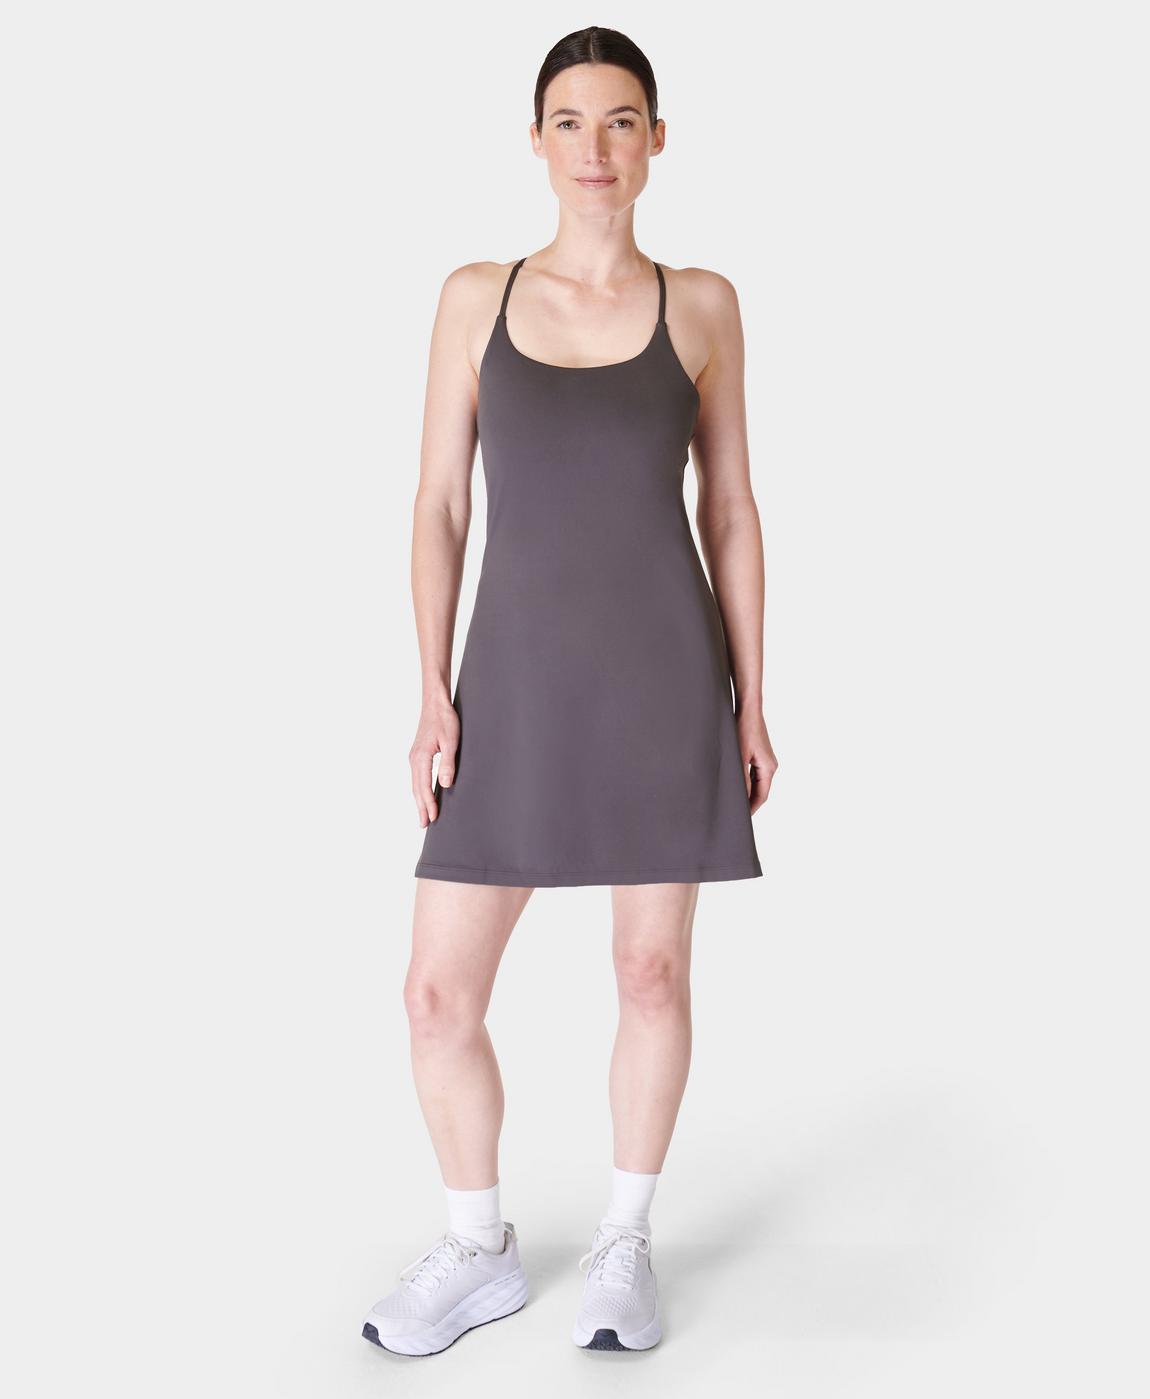 All Round Workout Dress - Urban Grey